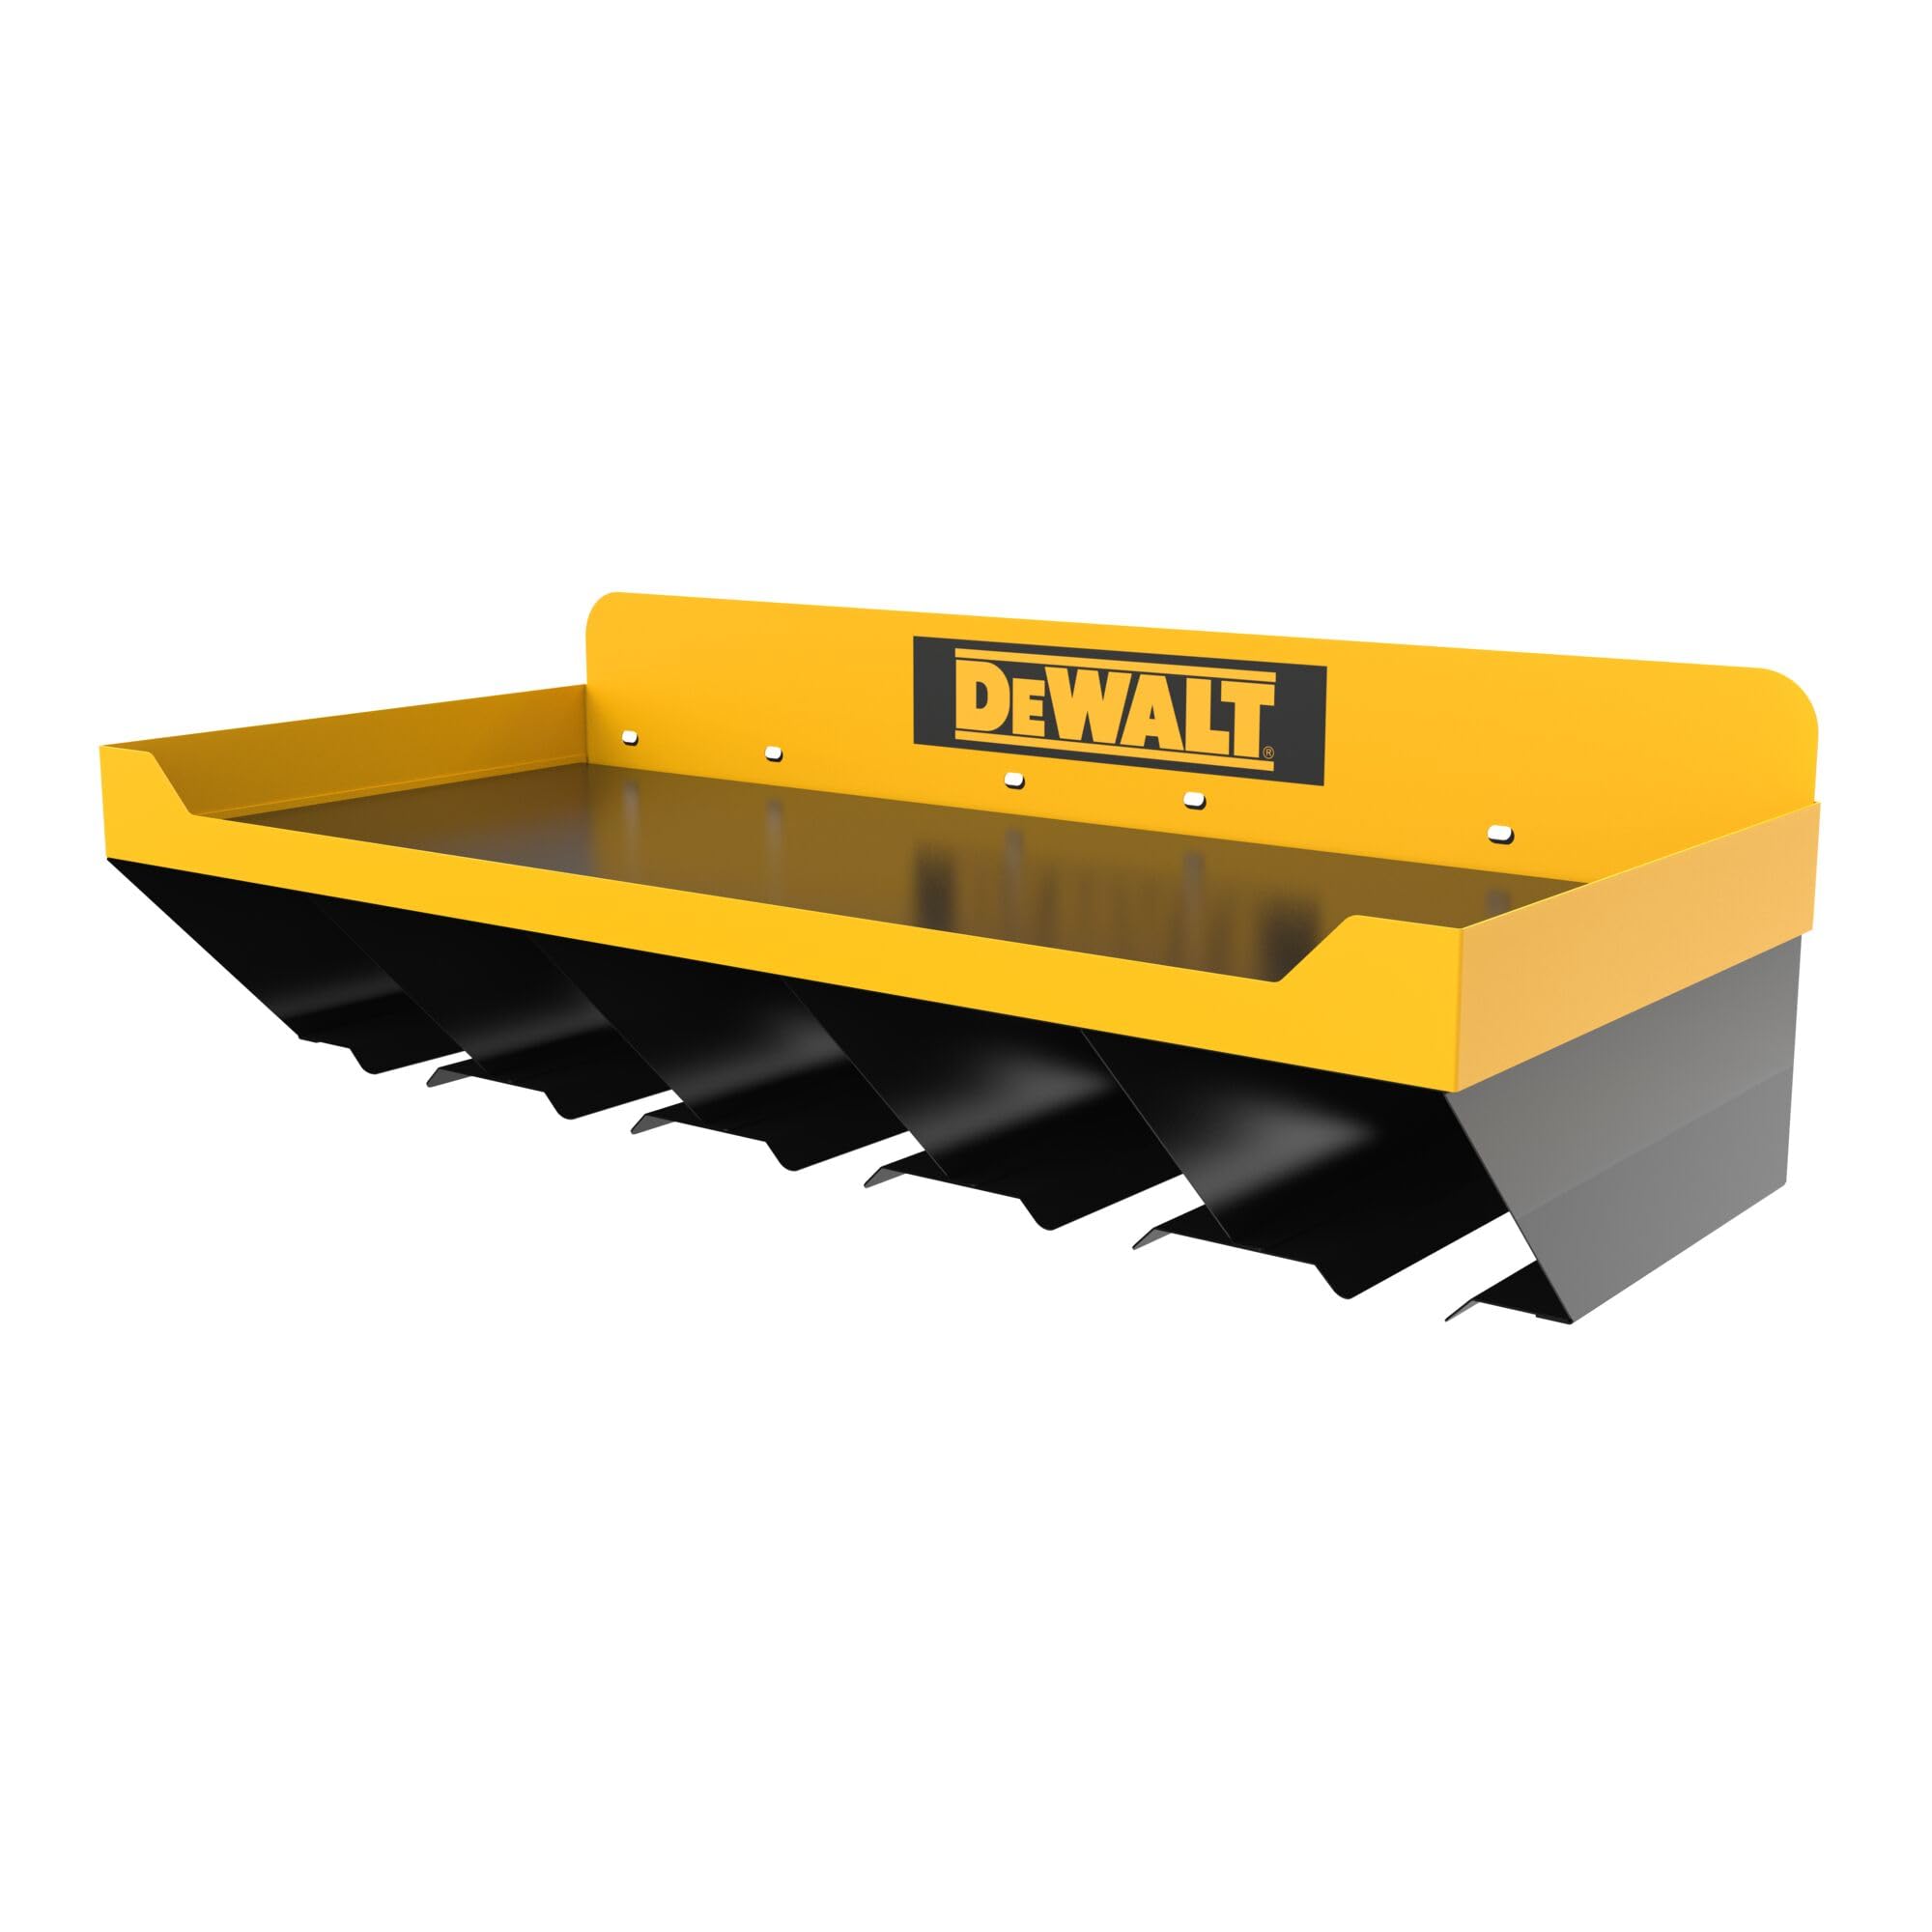 DEWALT Tool Organizer, Power Tool Storage Shelf, Hold up to 5 Tools, 100lb Capacity, DEWALT Workshop Storage System Compatible (DWST82822)